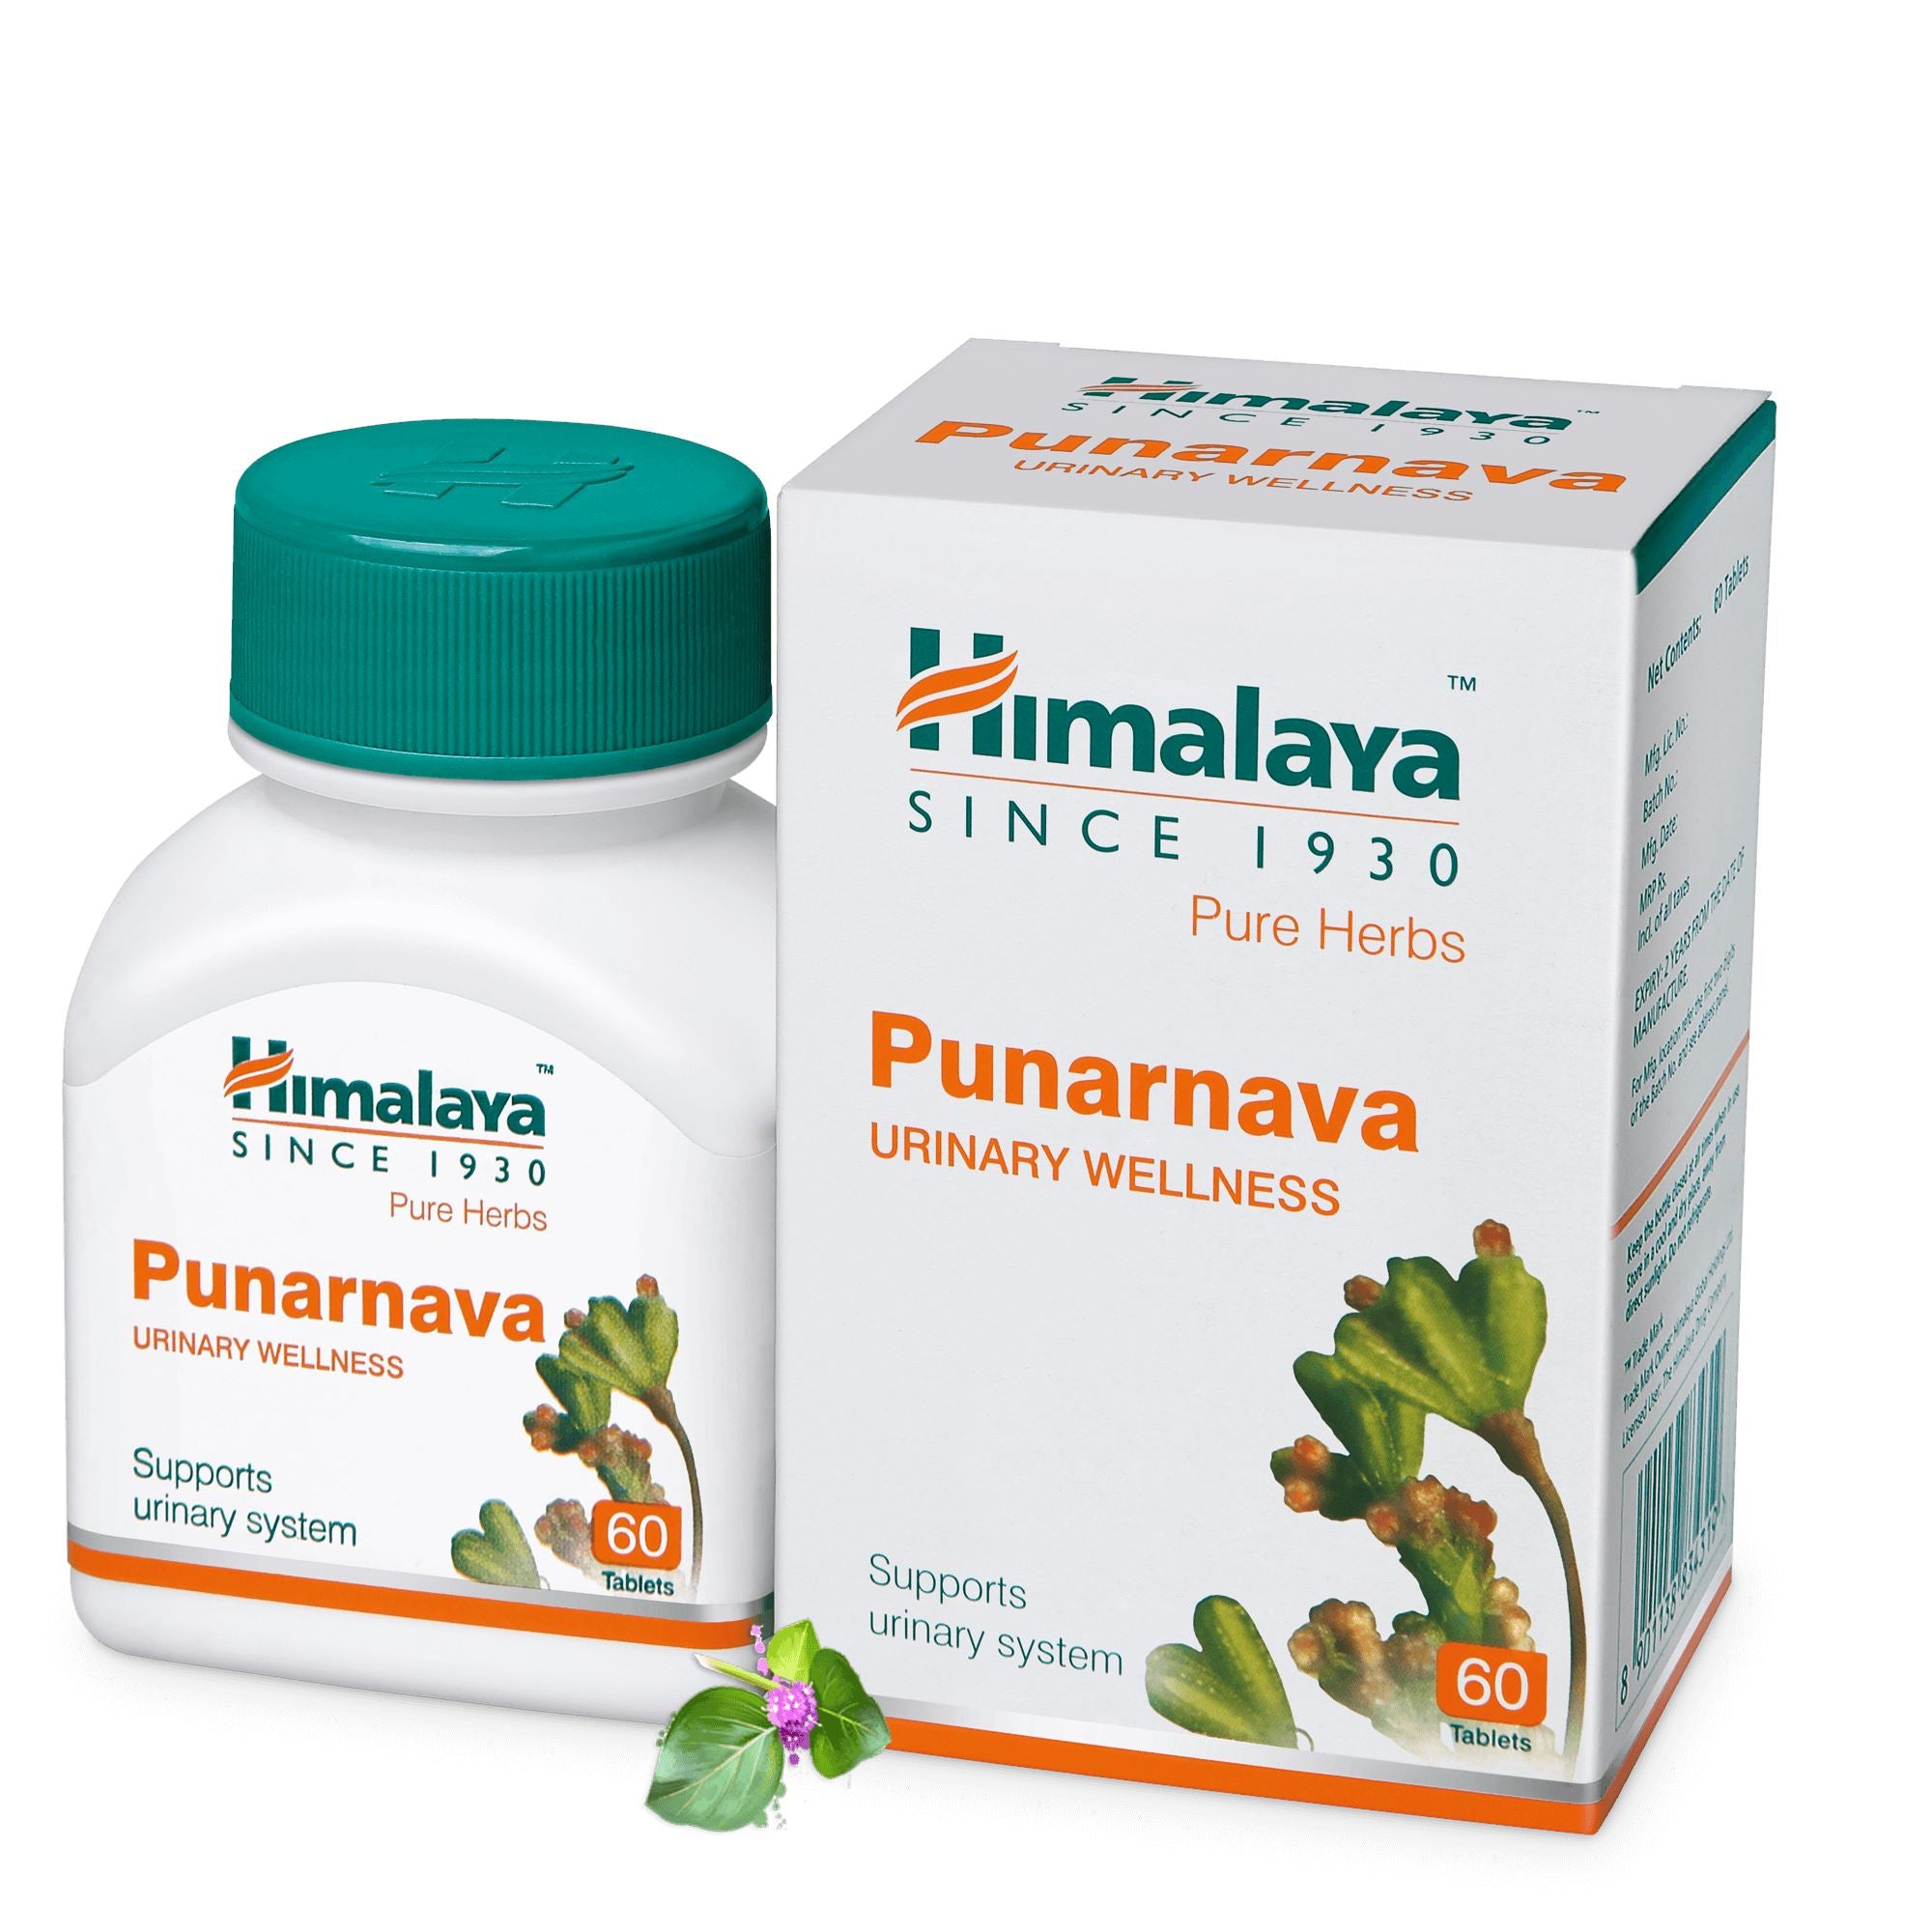 Himalaya Punarnava - Supports urinary system